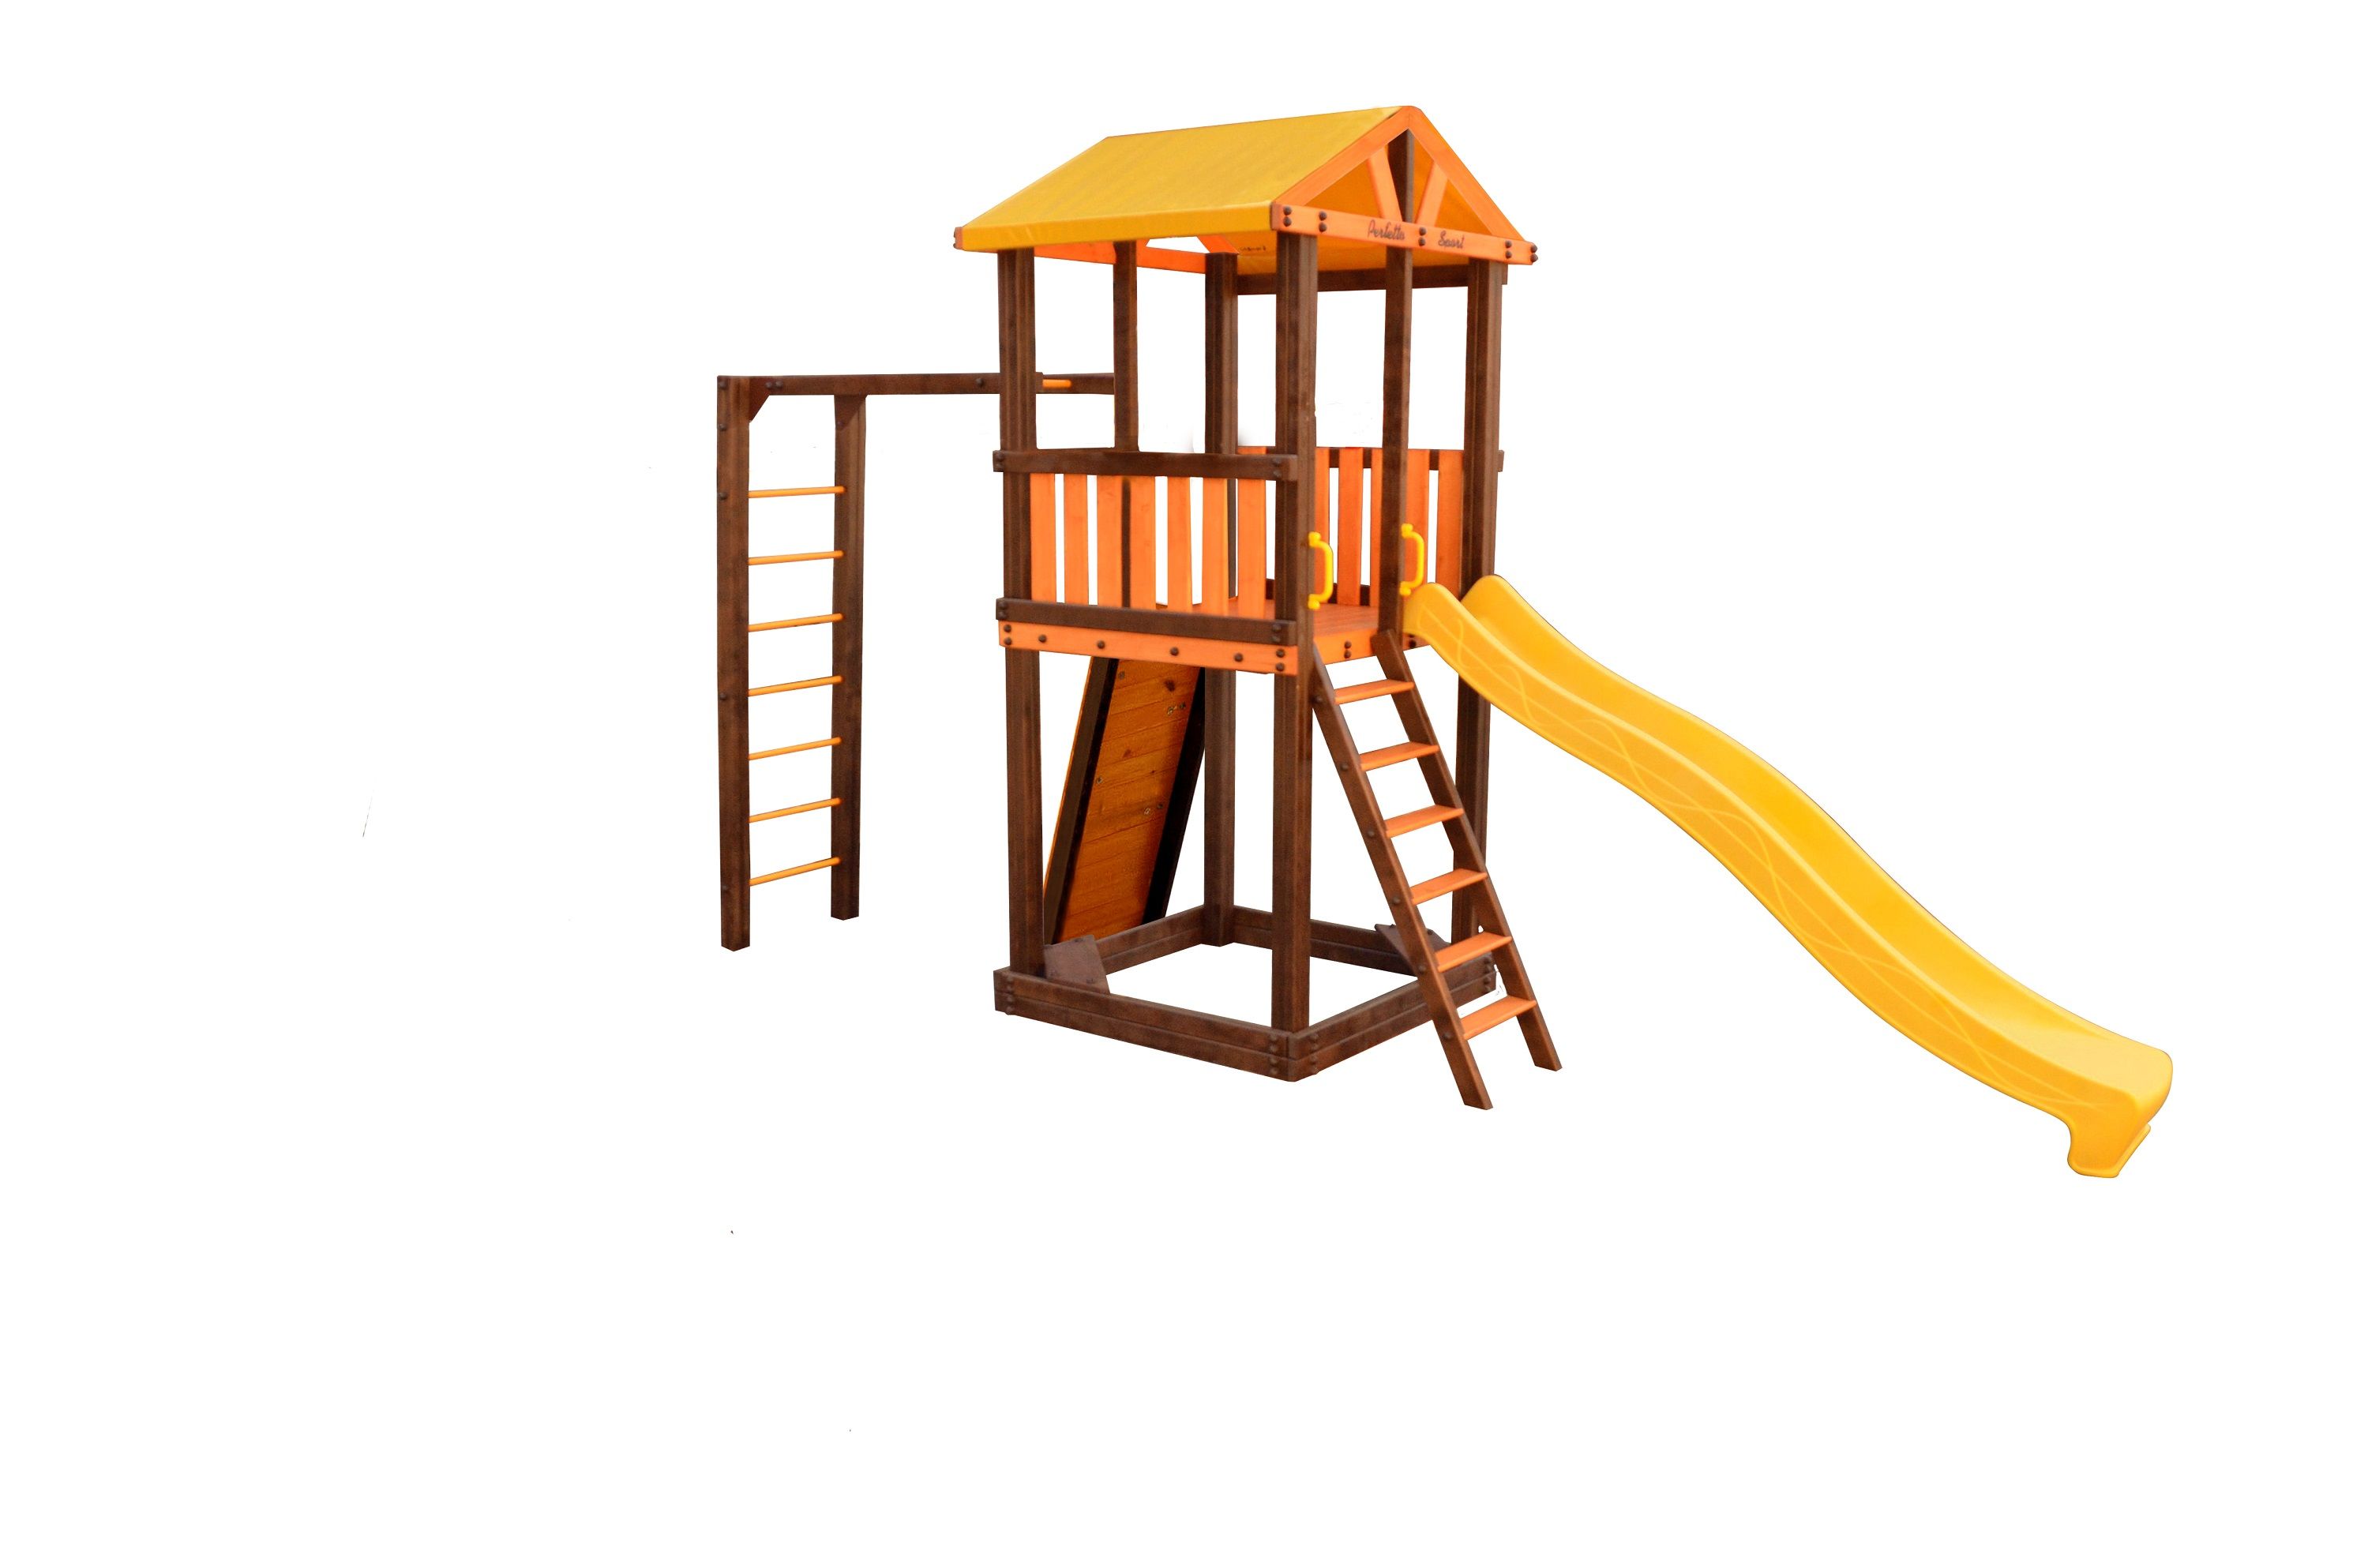 ИК Perfetto sport Pitigliano-16 оранжевый/коричневый лестница координационная sportex 4 м b31305 2 оранжевый